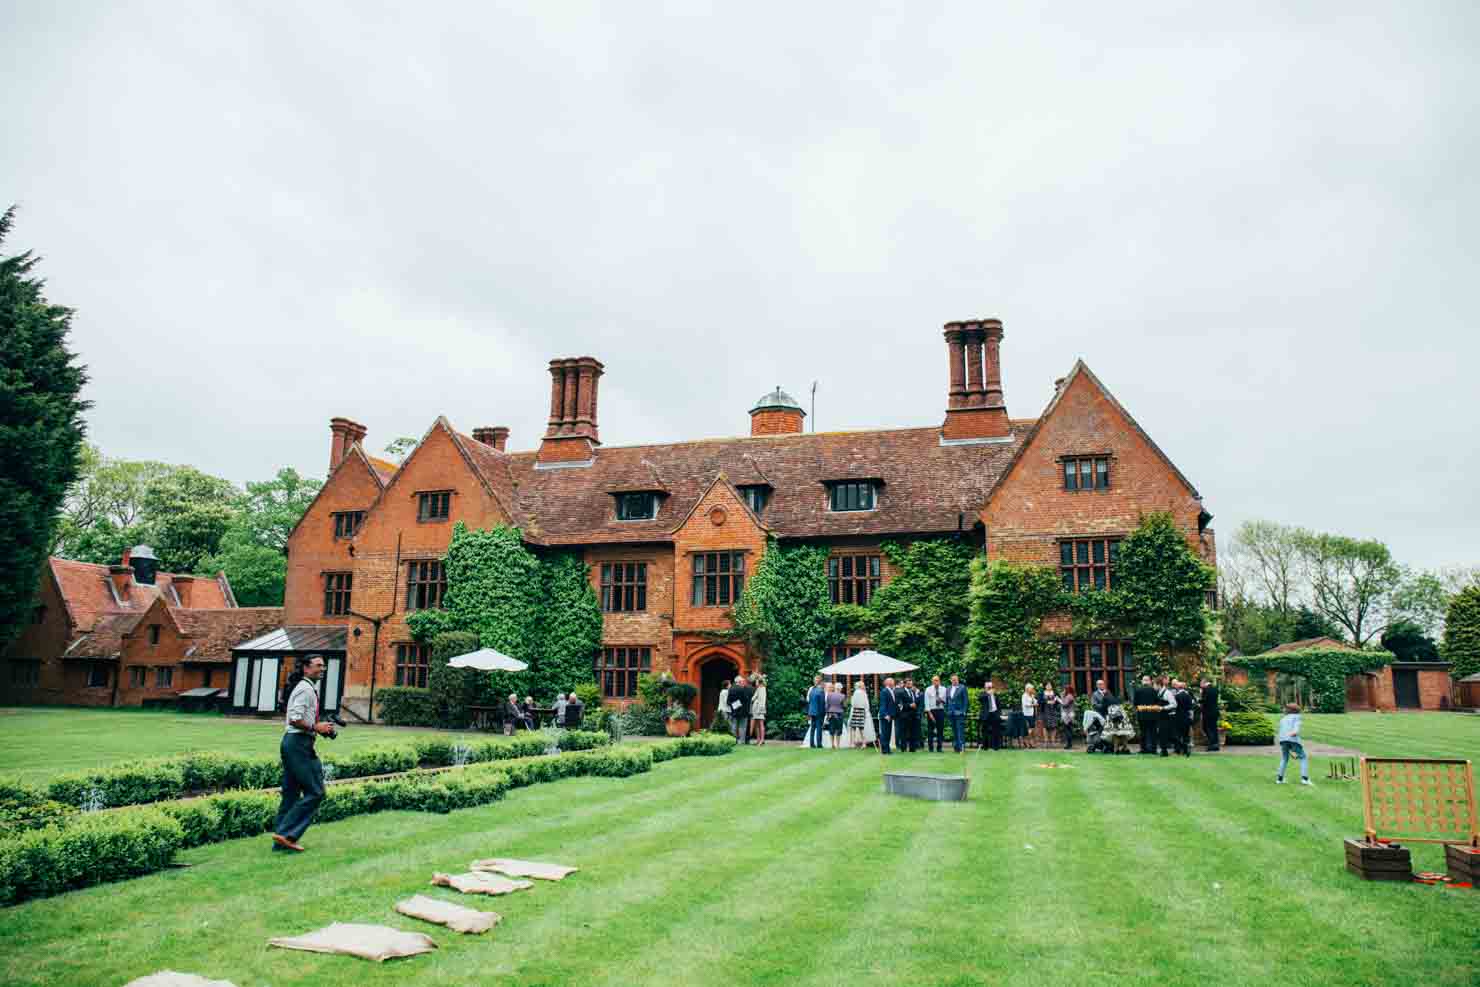 relaxed woodhall manor suffolk wedding photographer